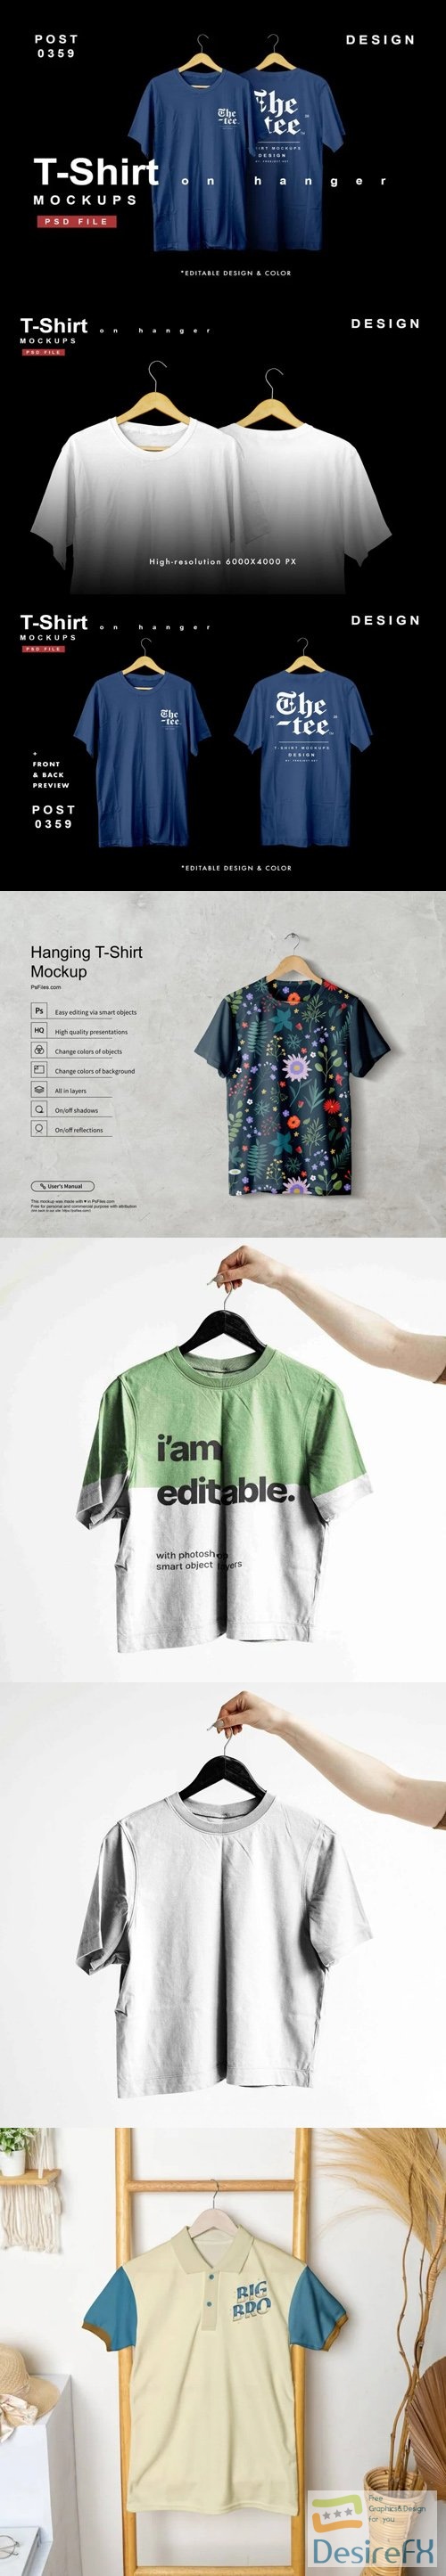 Hanging T-Shirt PSD Mockups Templates Collection|